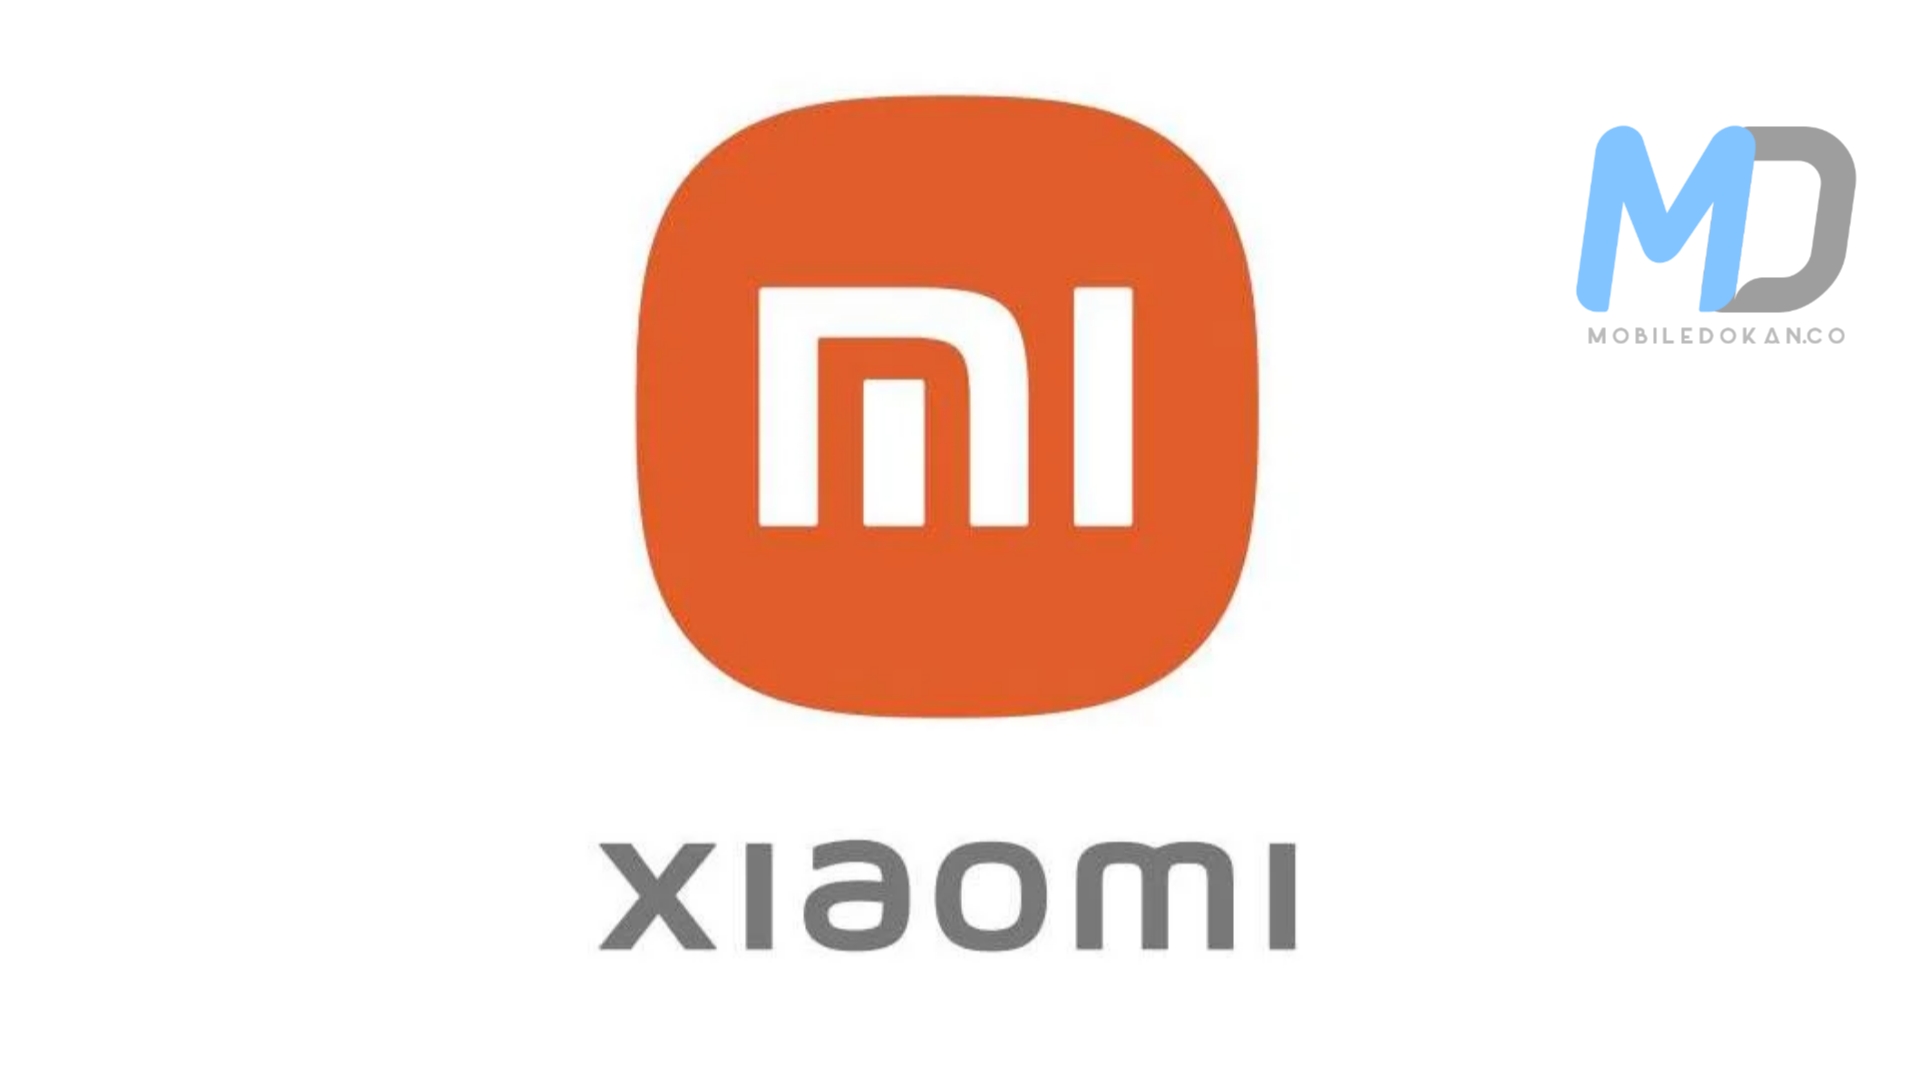 Global variant of Xiaomi Mi Pad ‘nabu’ appears on FCC